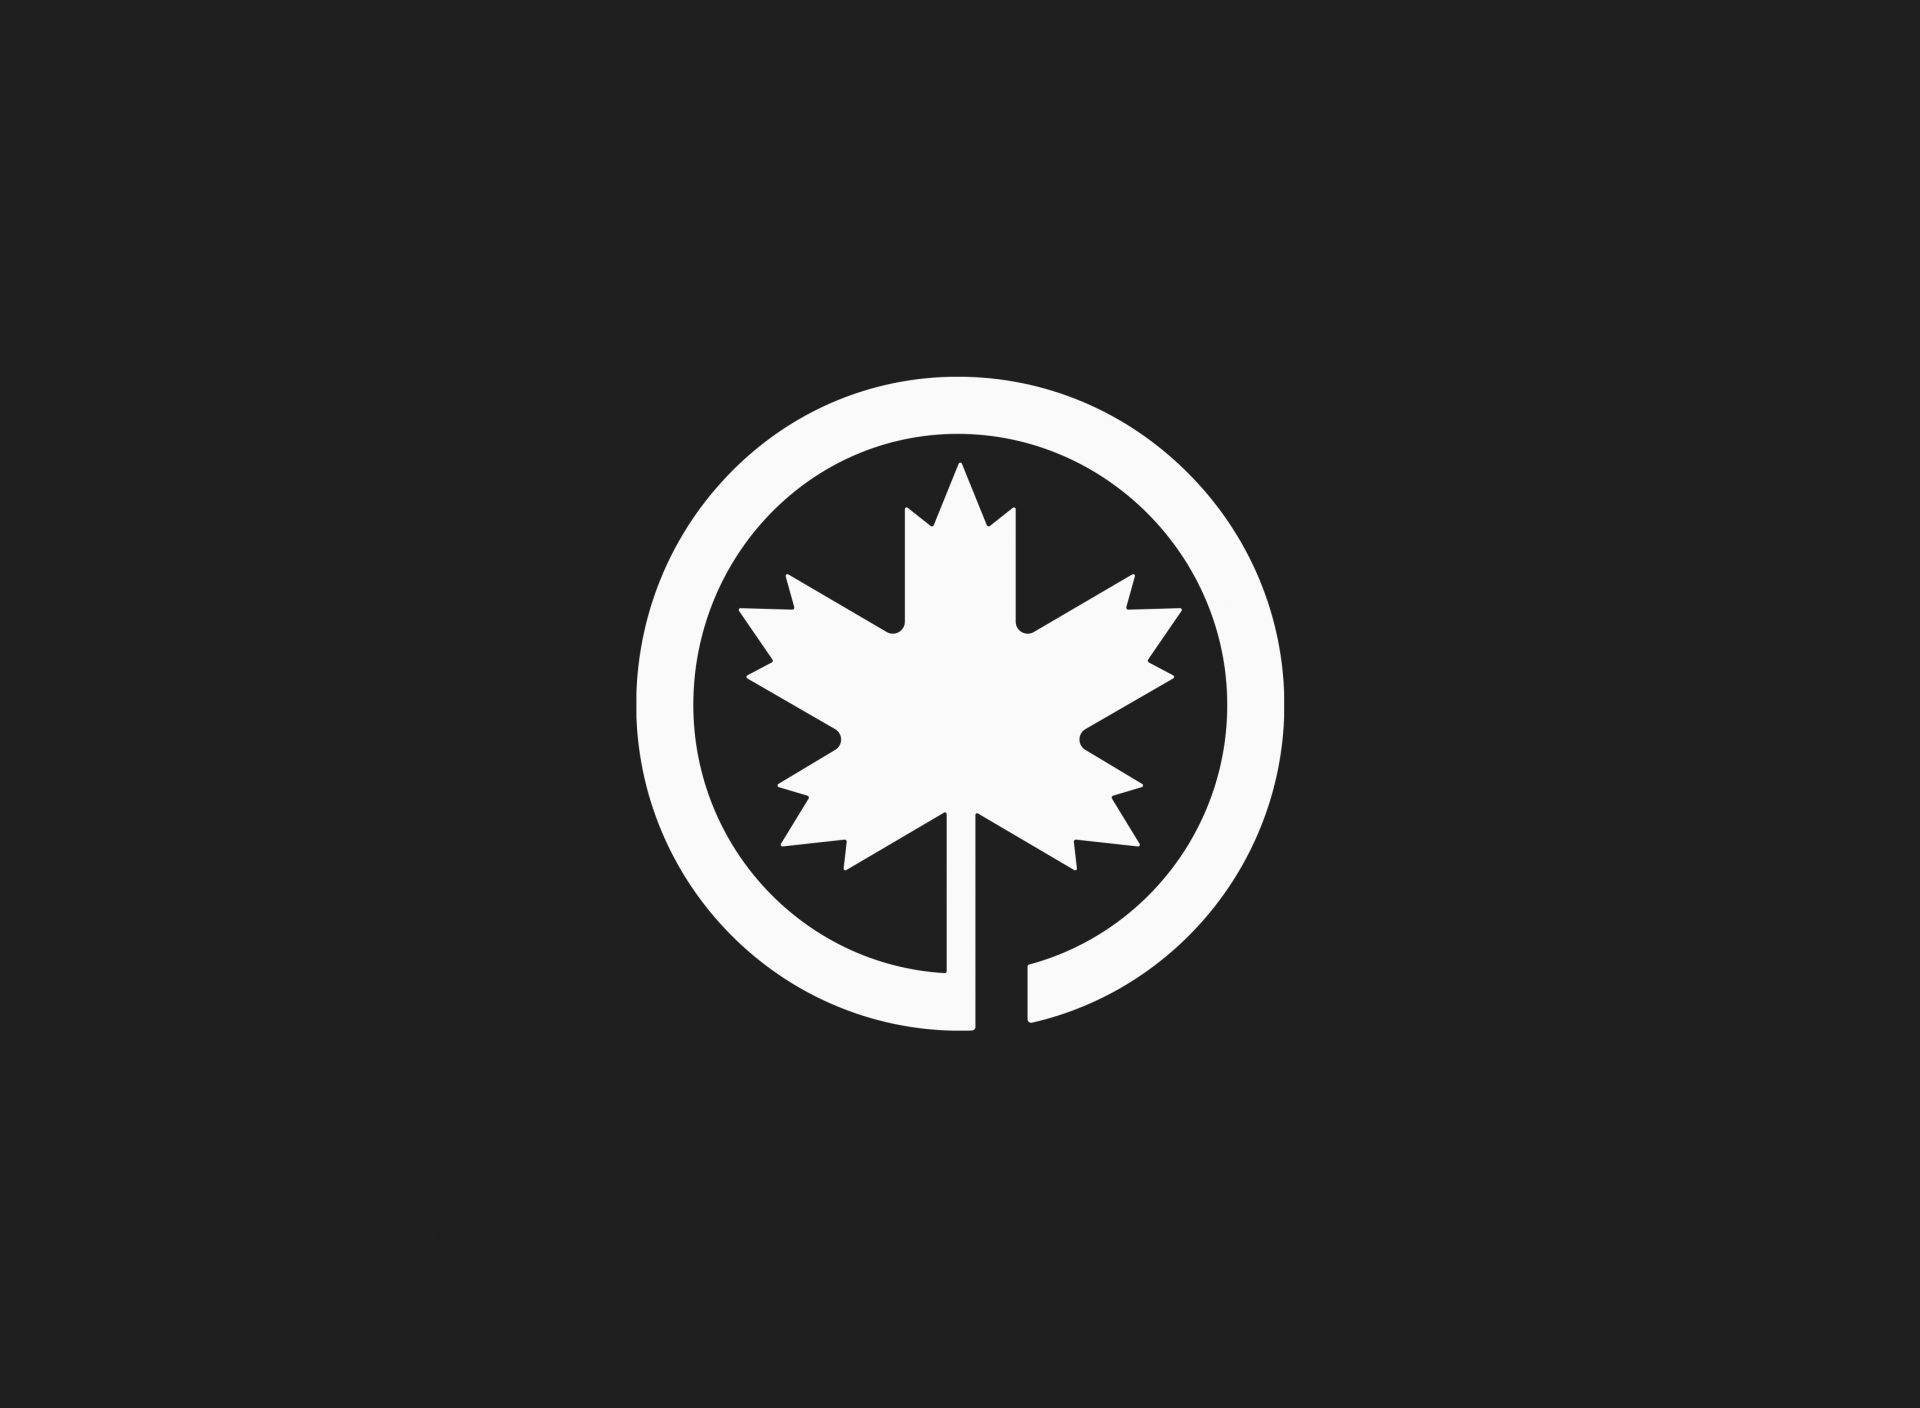 canadian government symbol